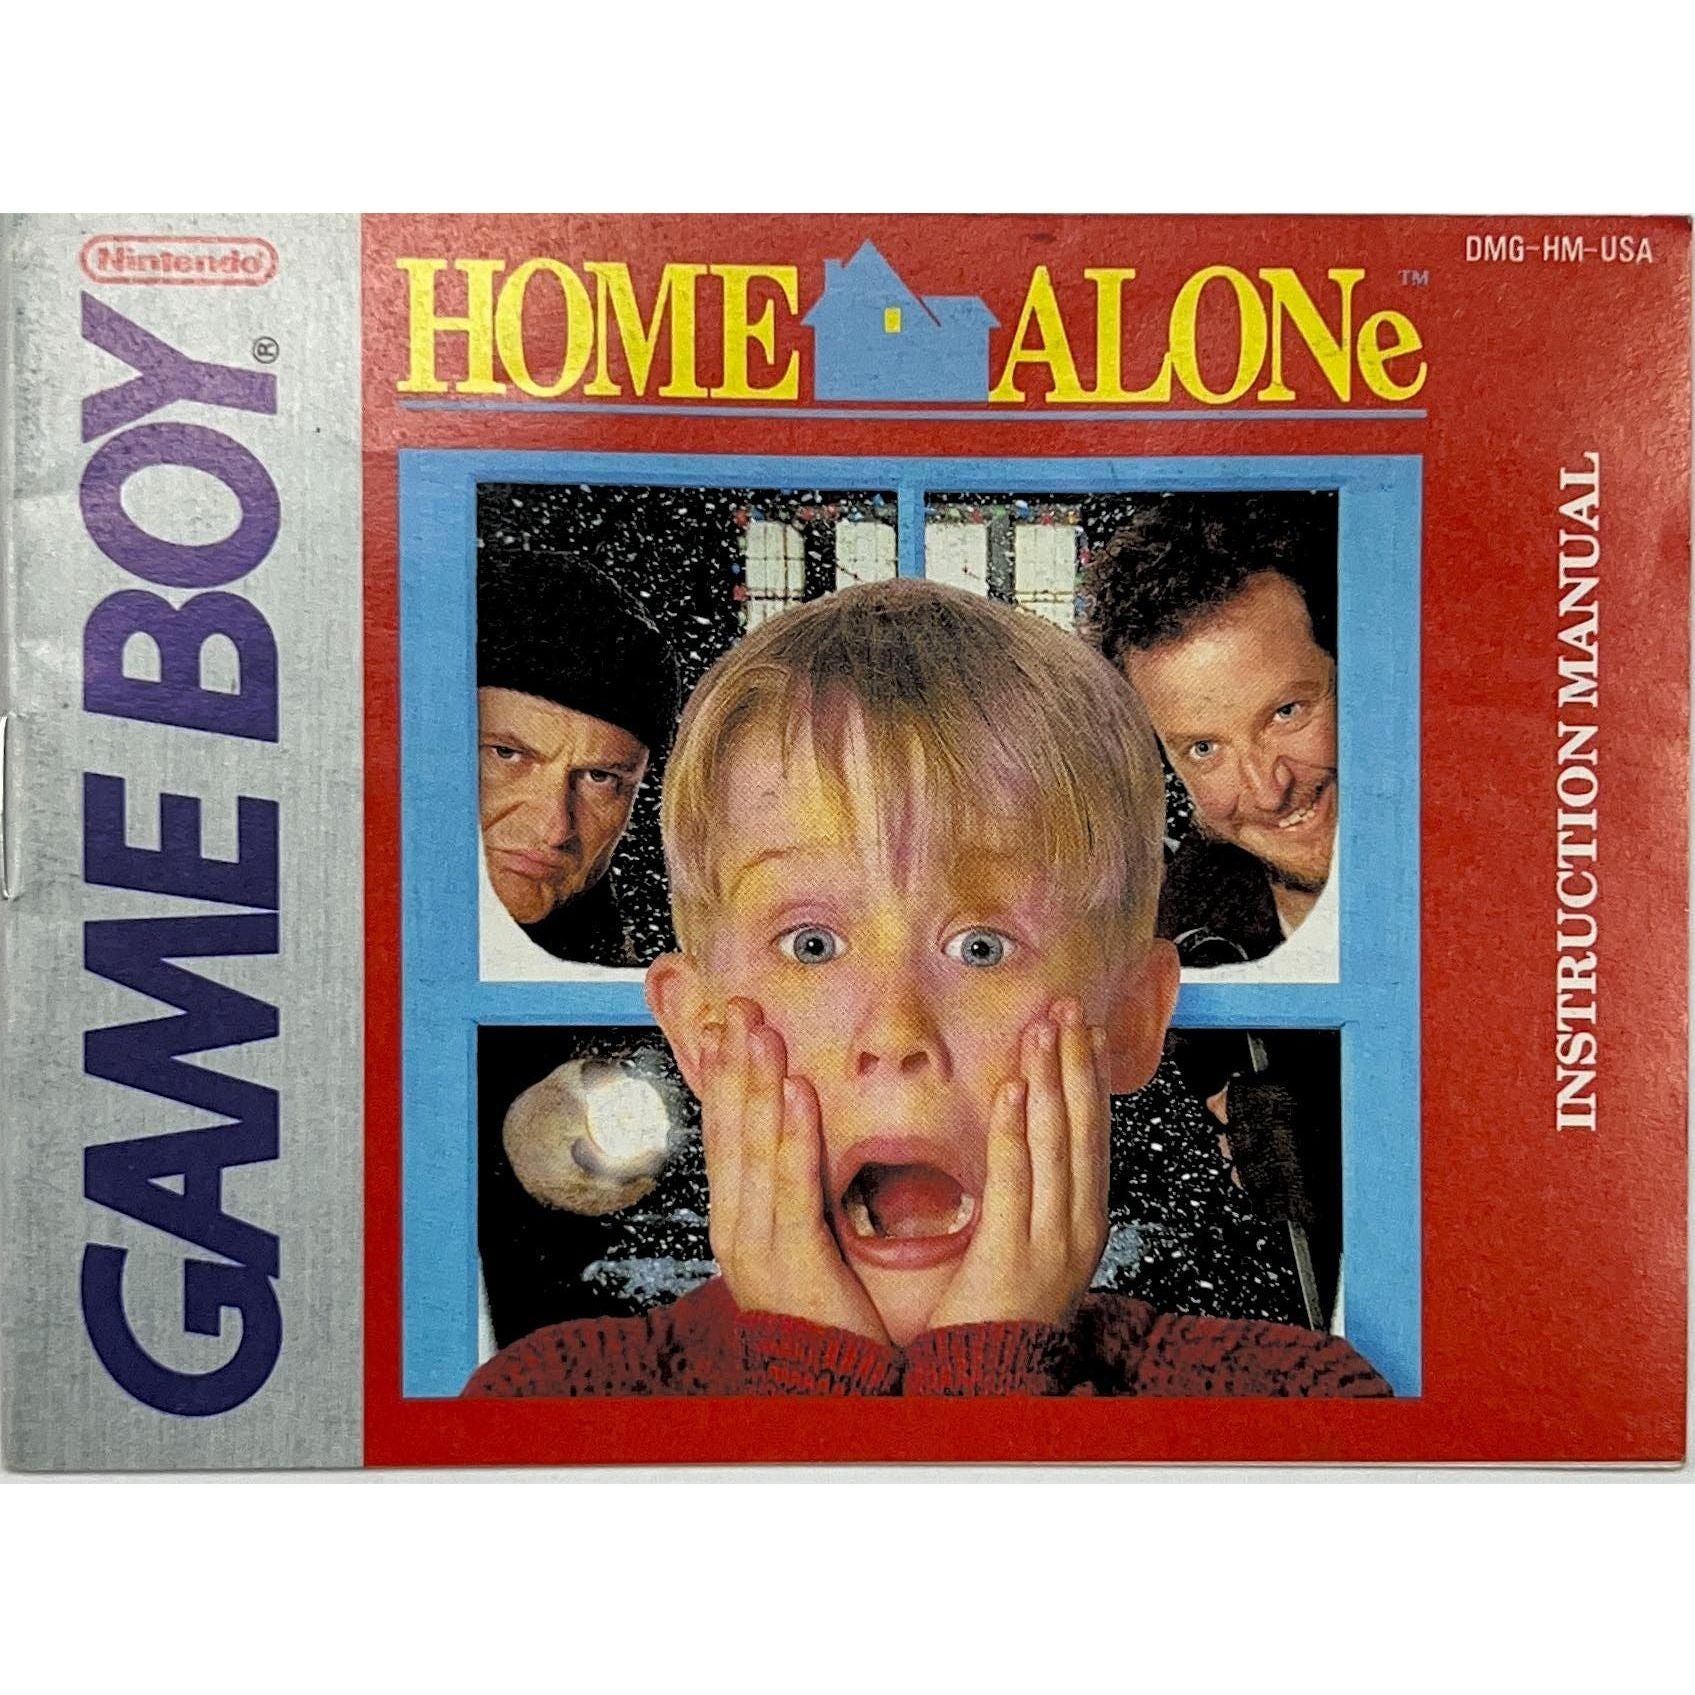 GB - Home Alone (Manual)